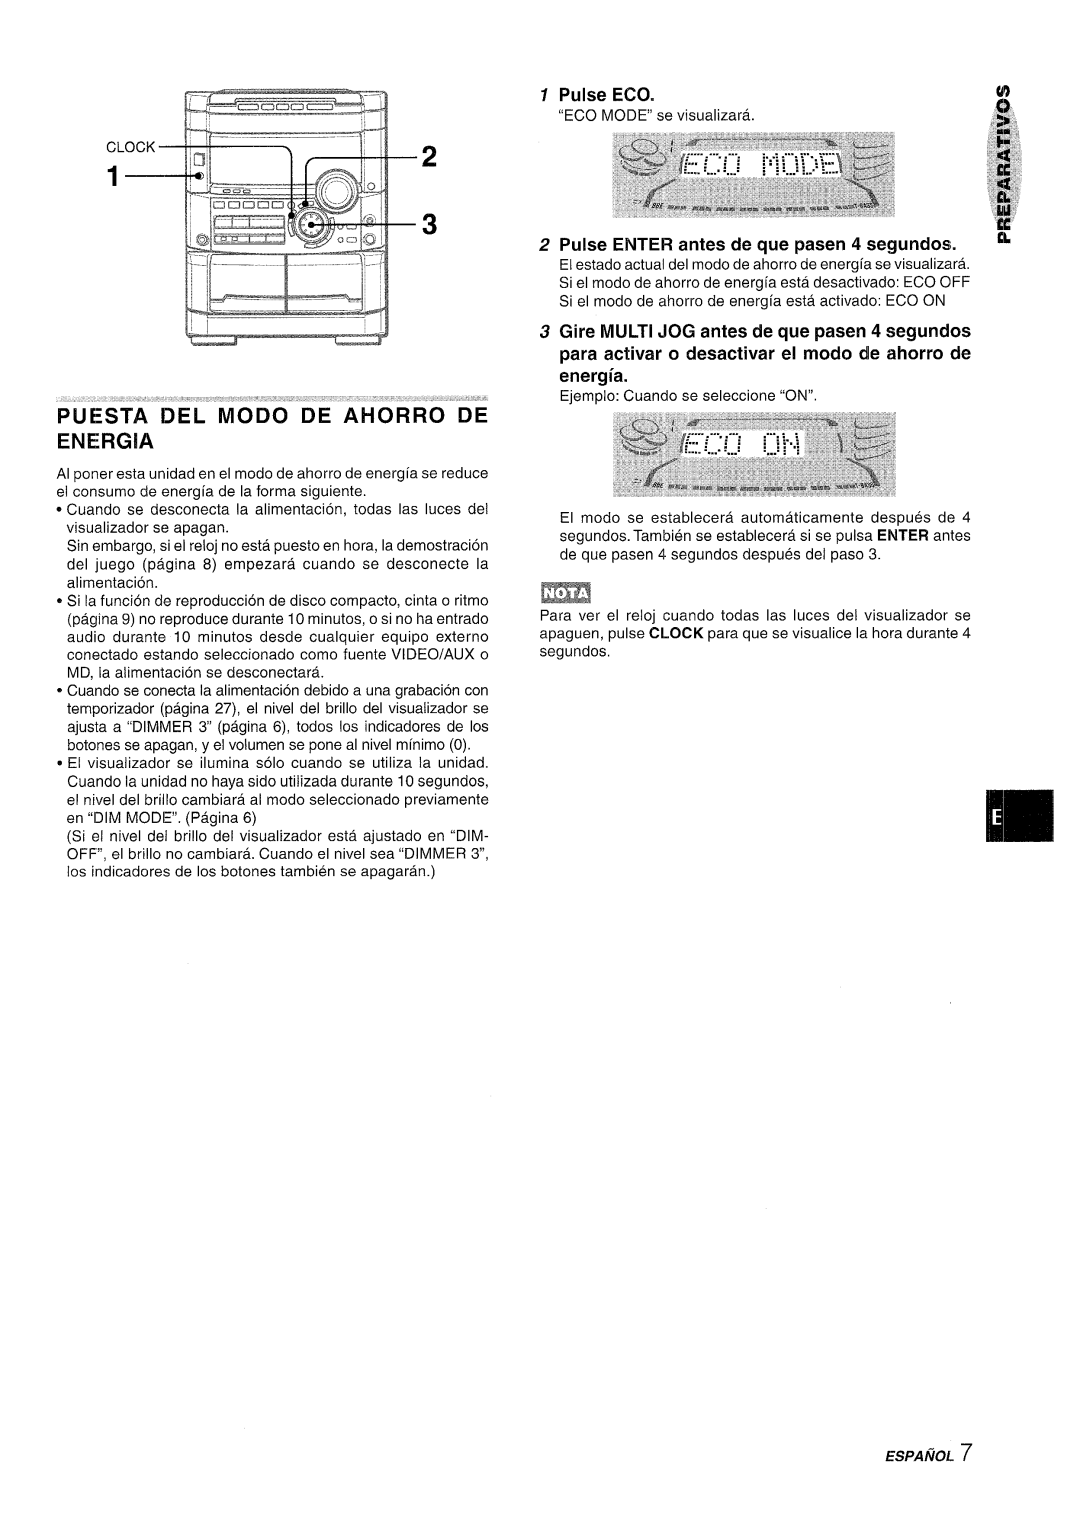 Sony NSX-A767 manual PUESTi ‘DEL MObO”” DE AliO’RRO” QE ENERGIA, Pulse ECO, Pulse ENTER antes de que pasen 4 segundos 